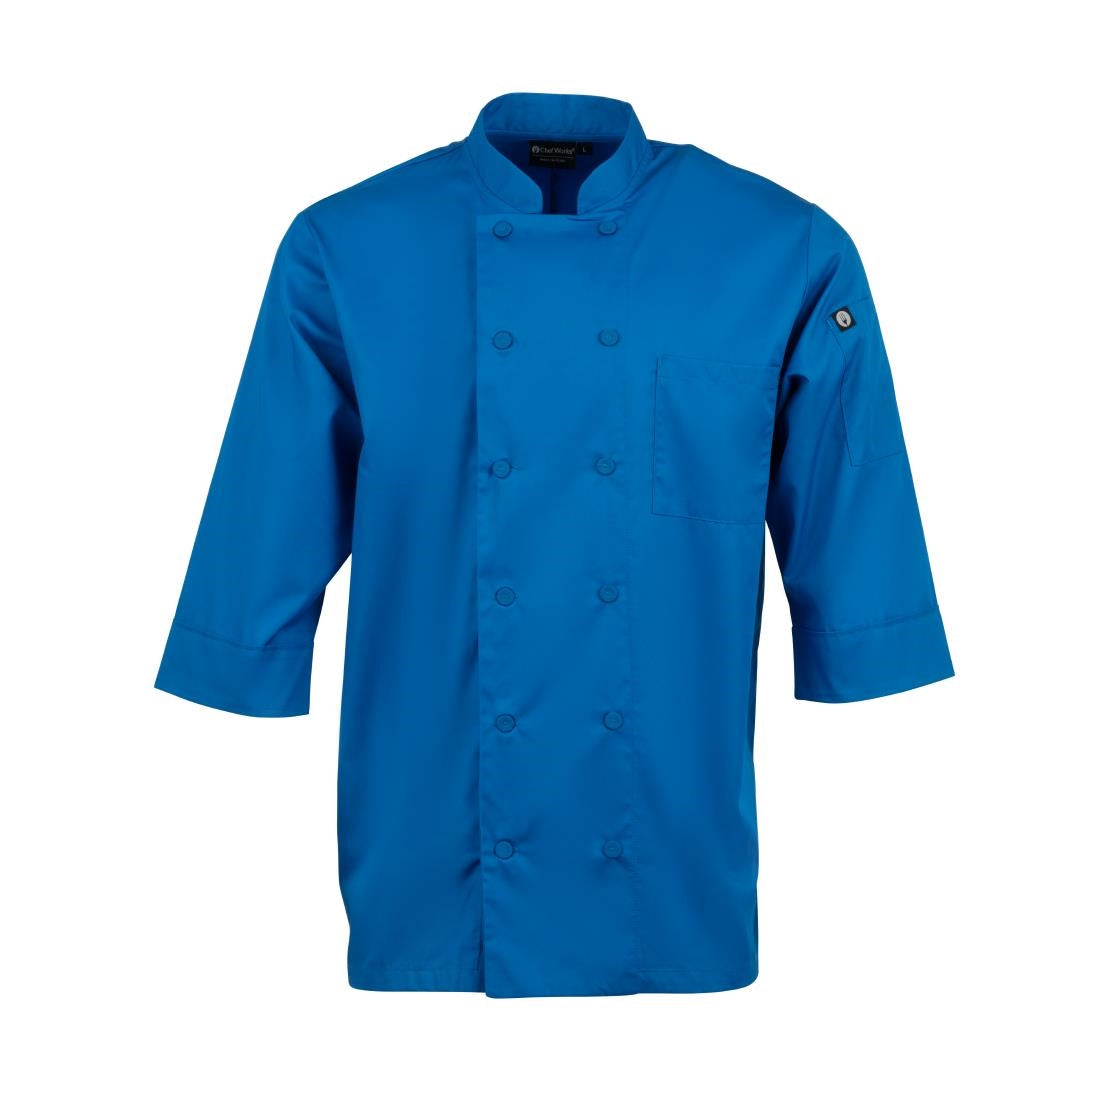 B178-XL Chef Works Unisex Chefs Jacket Blue XL JD Catering Equipment Solutions Ltd